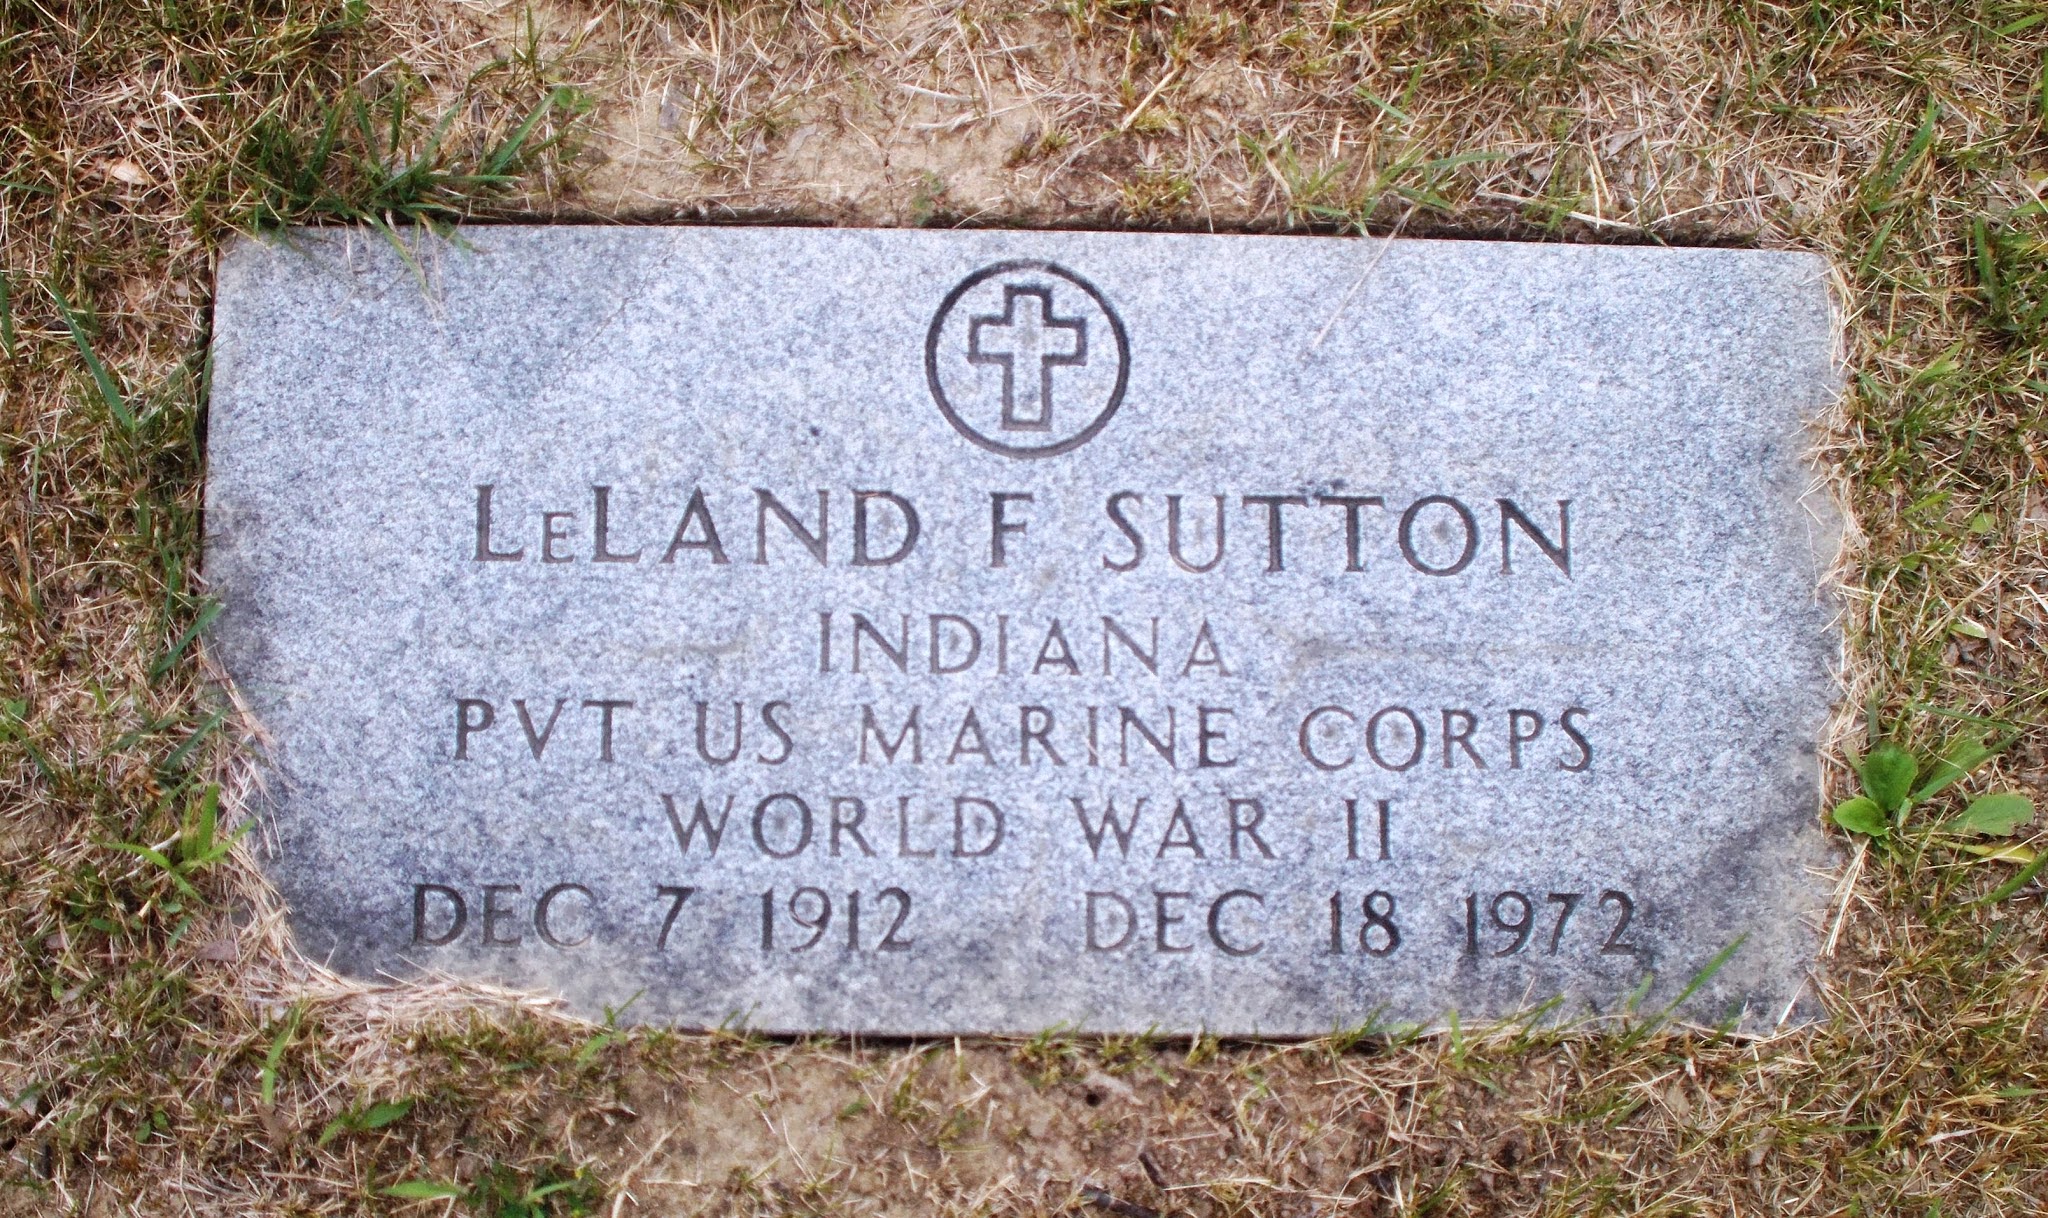 LeLand F Sutton